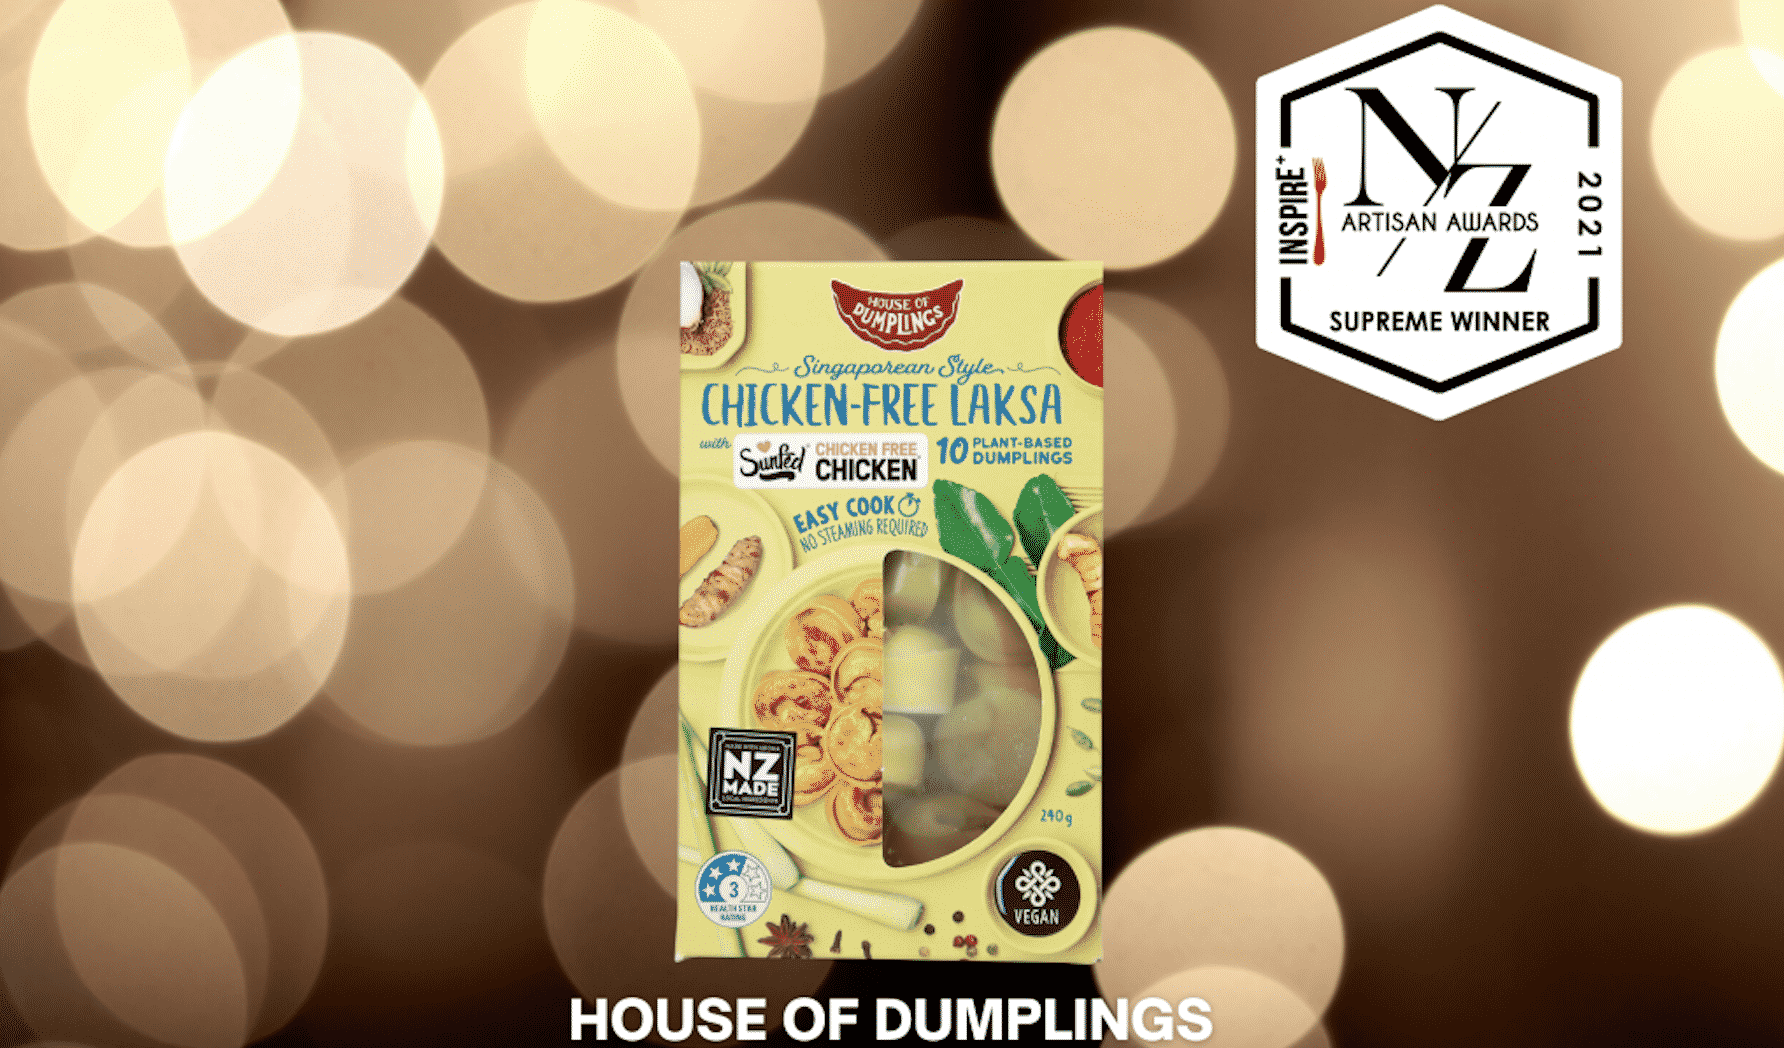 House of Dumplings Supreme Award Winner - Chicken-Free Laksa